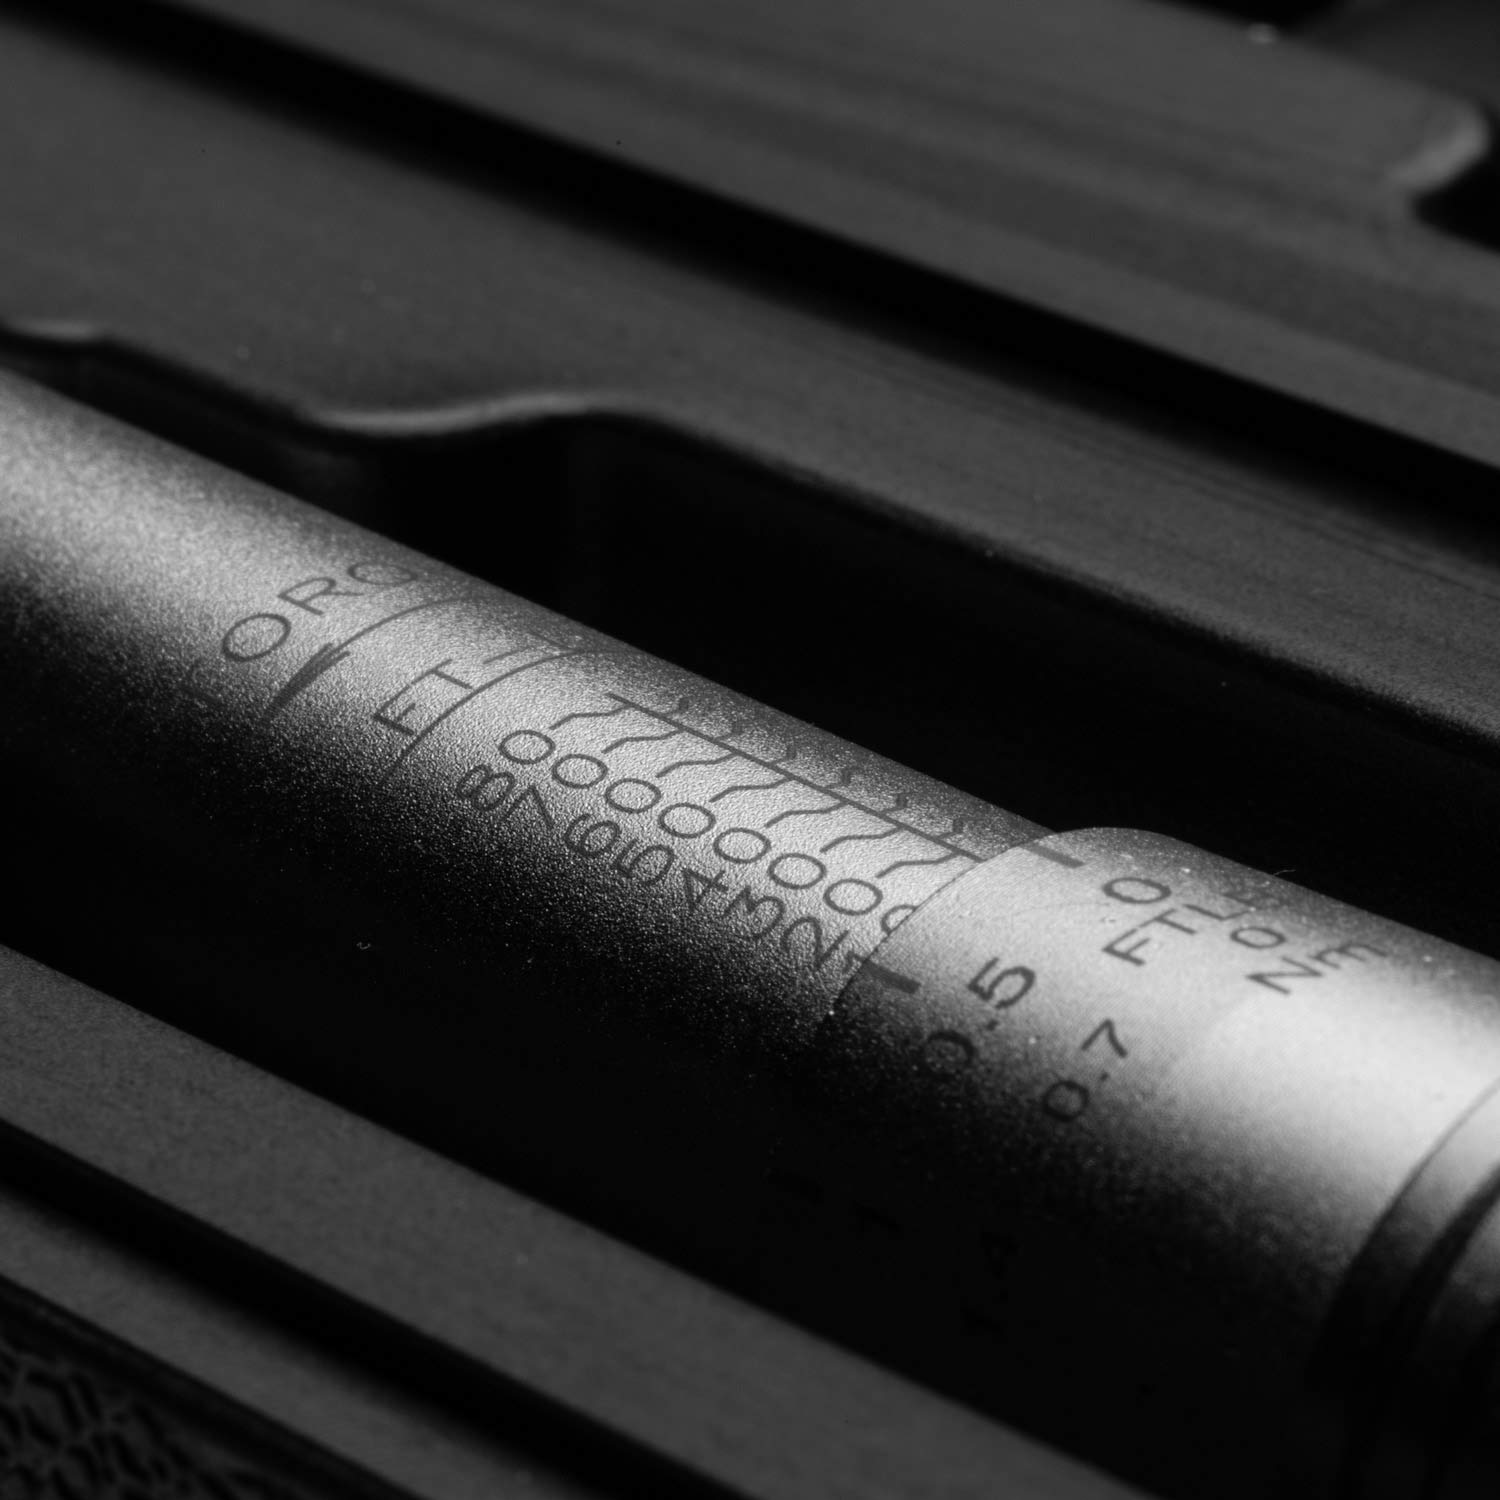 Capri Tools 10-80 ft. lbs. Interchangeable Torque Wrench, 14 mm x 18 mm Drive